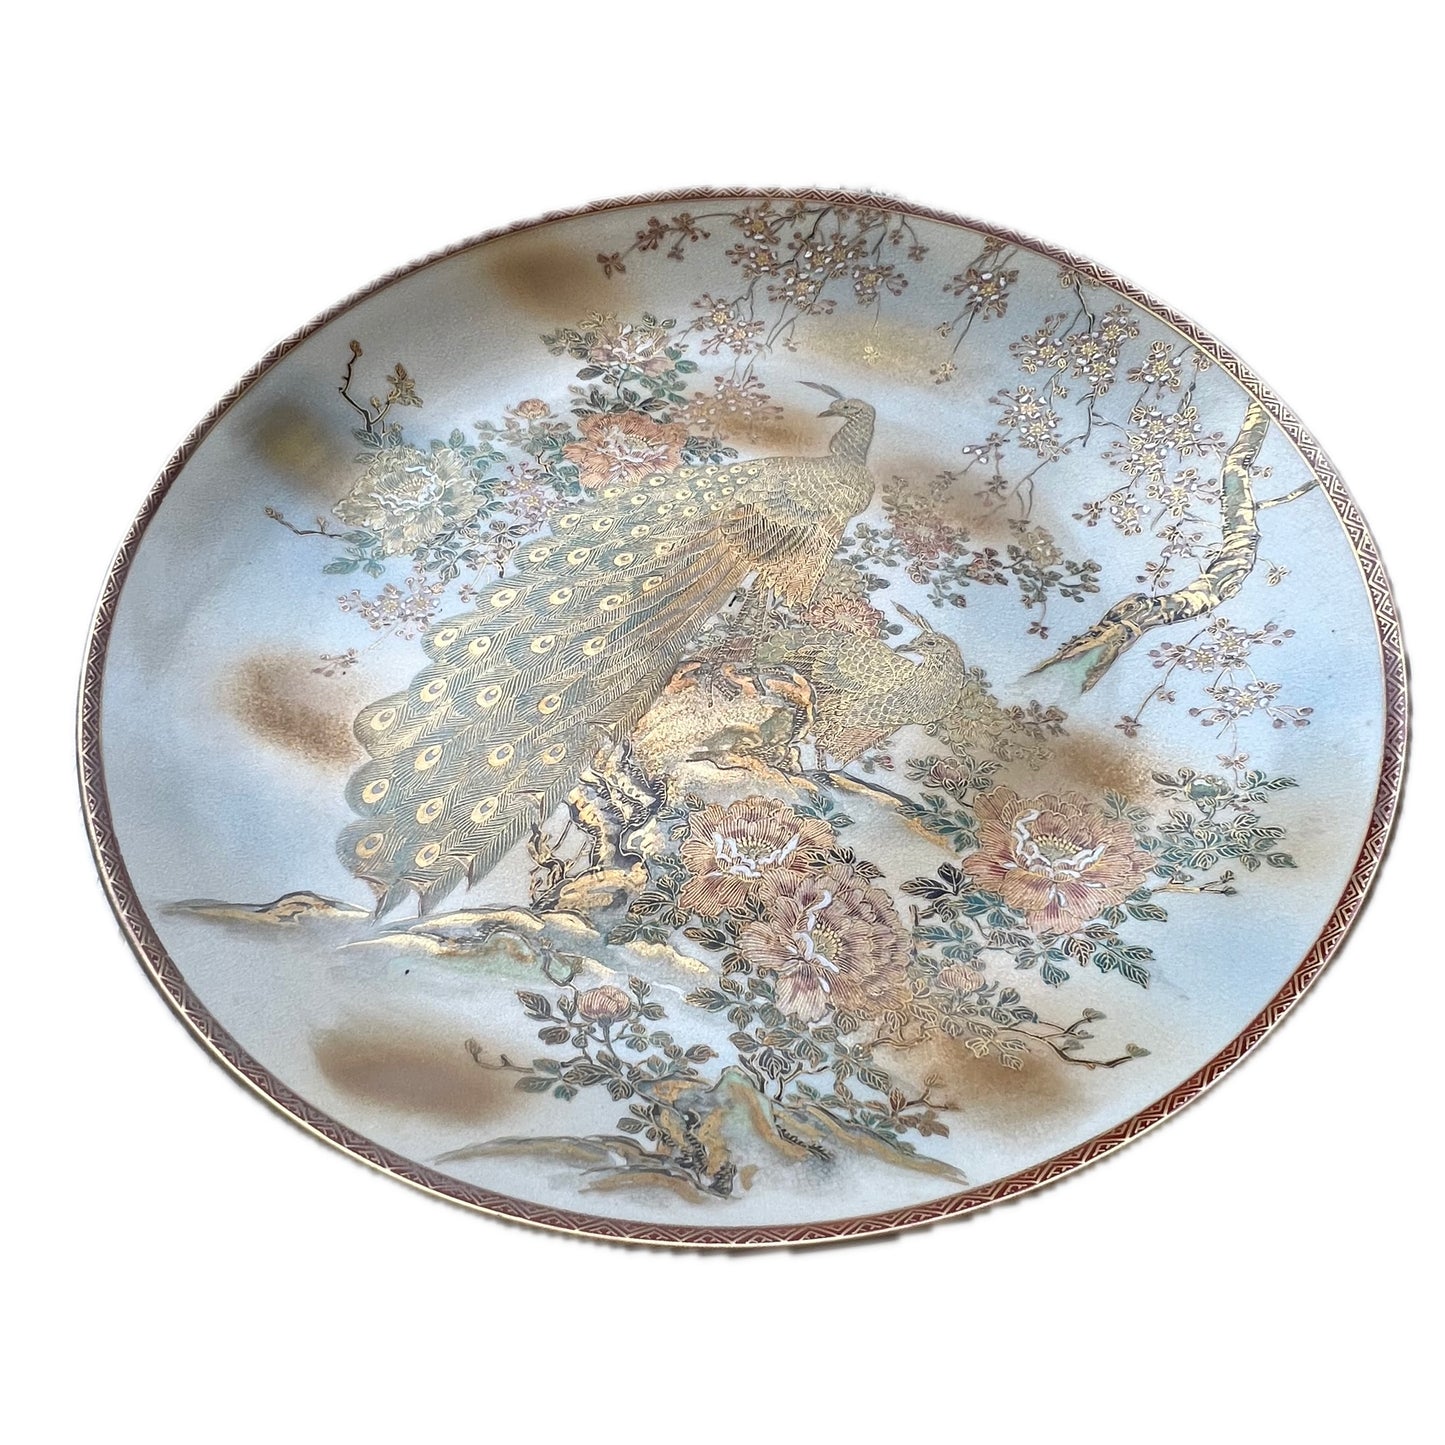 Monumental antique Japanese Satsuma porcelain charger circa late Meiji to early Taisho period